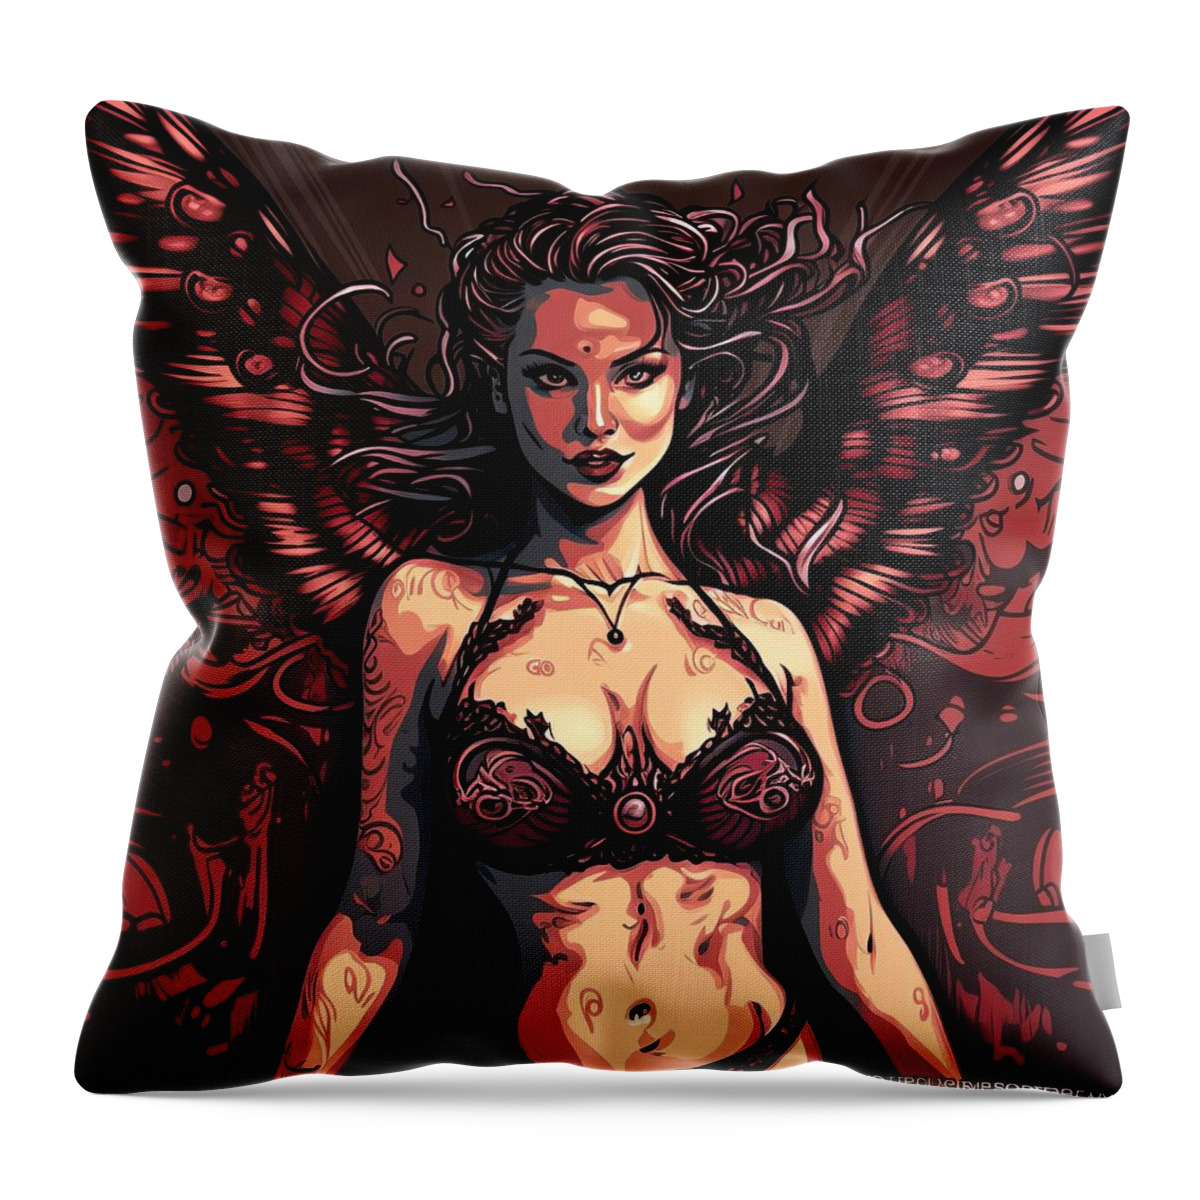 Angel Throw Pillow featuring the digital art Little Angel Doll by My Head Cinema